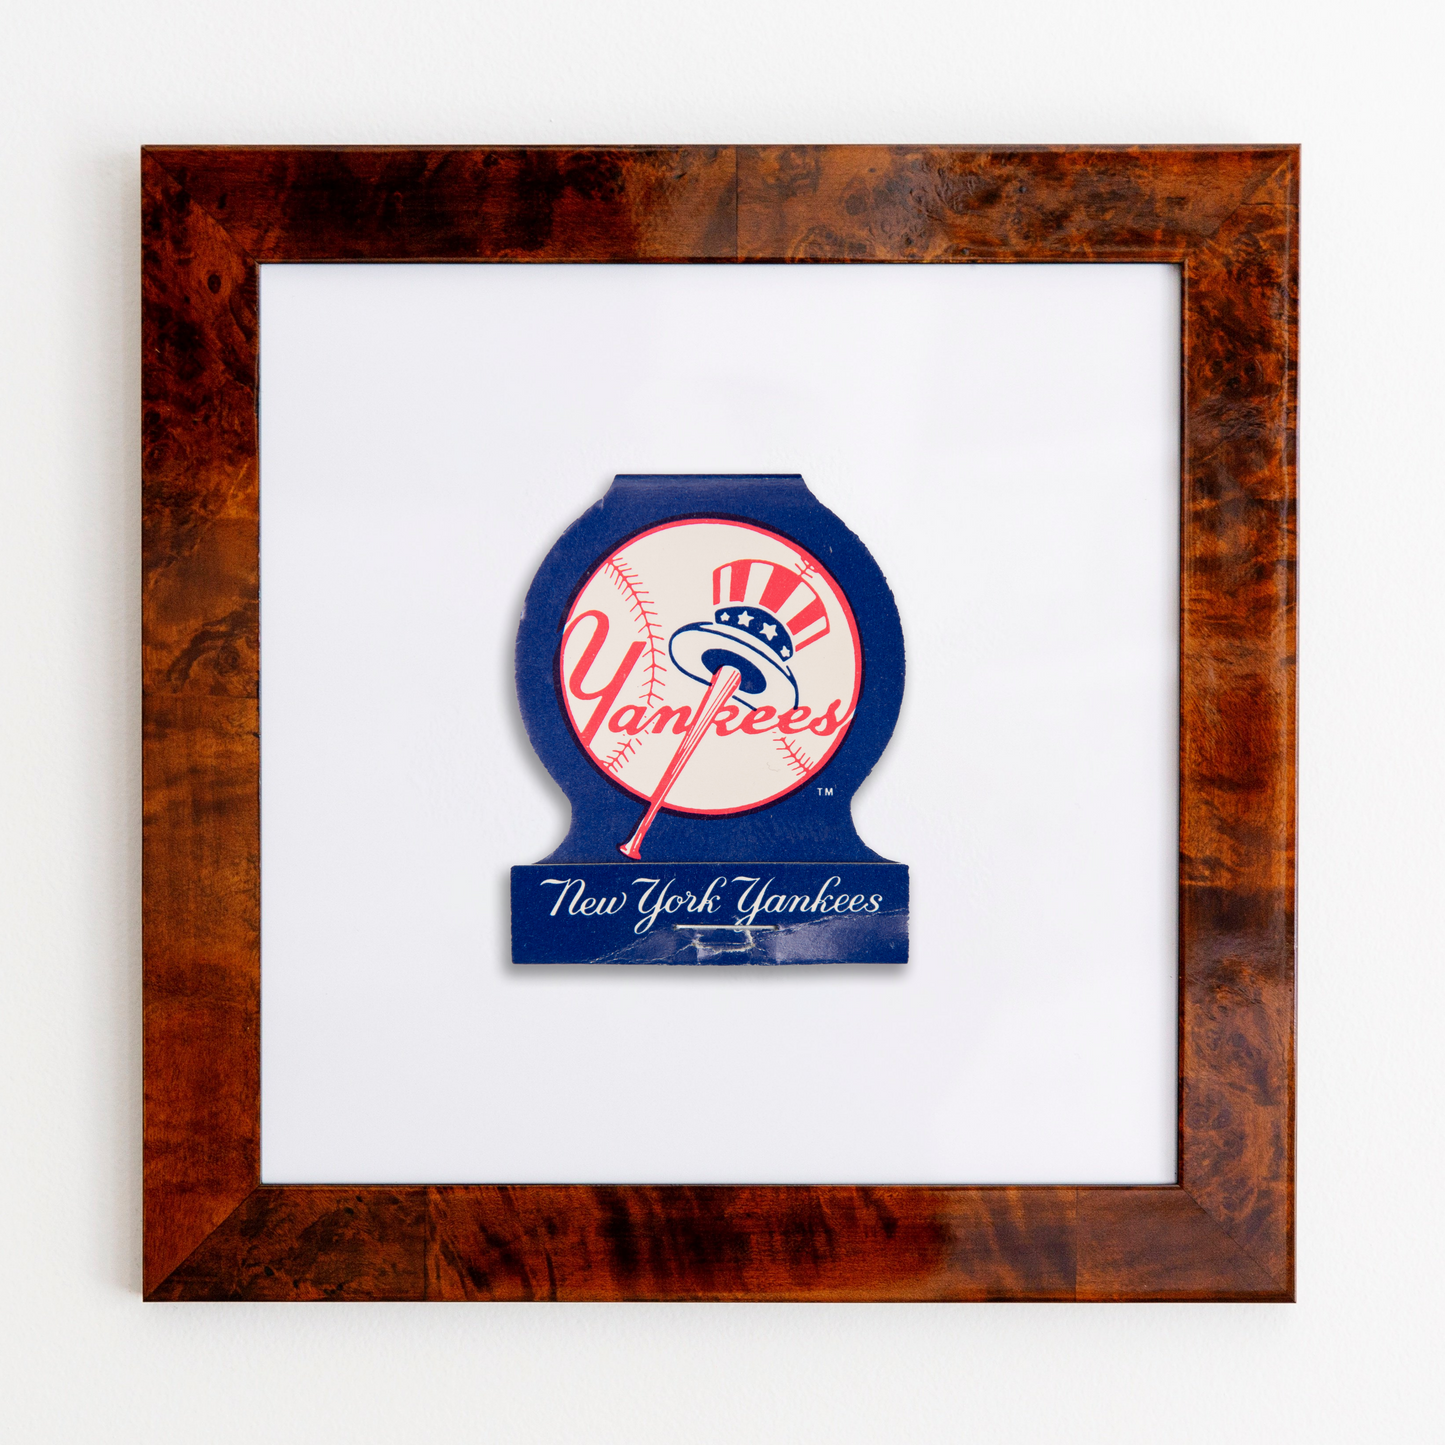 New York Yankees (Vintage)